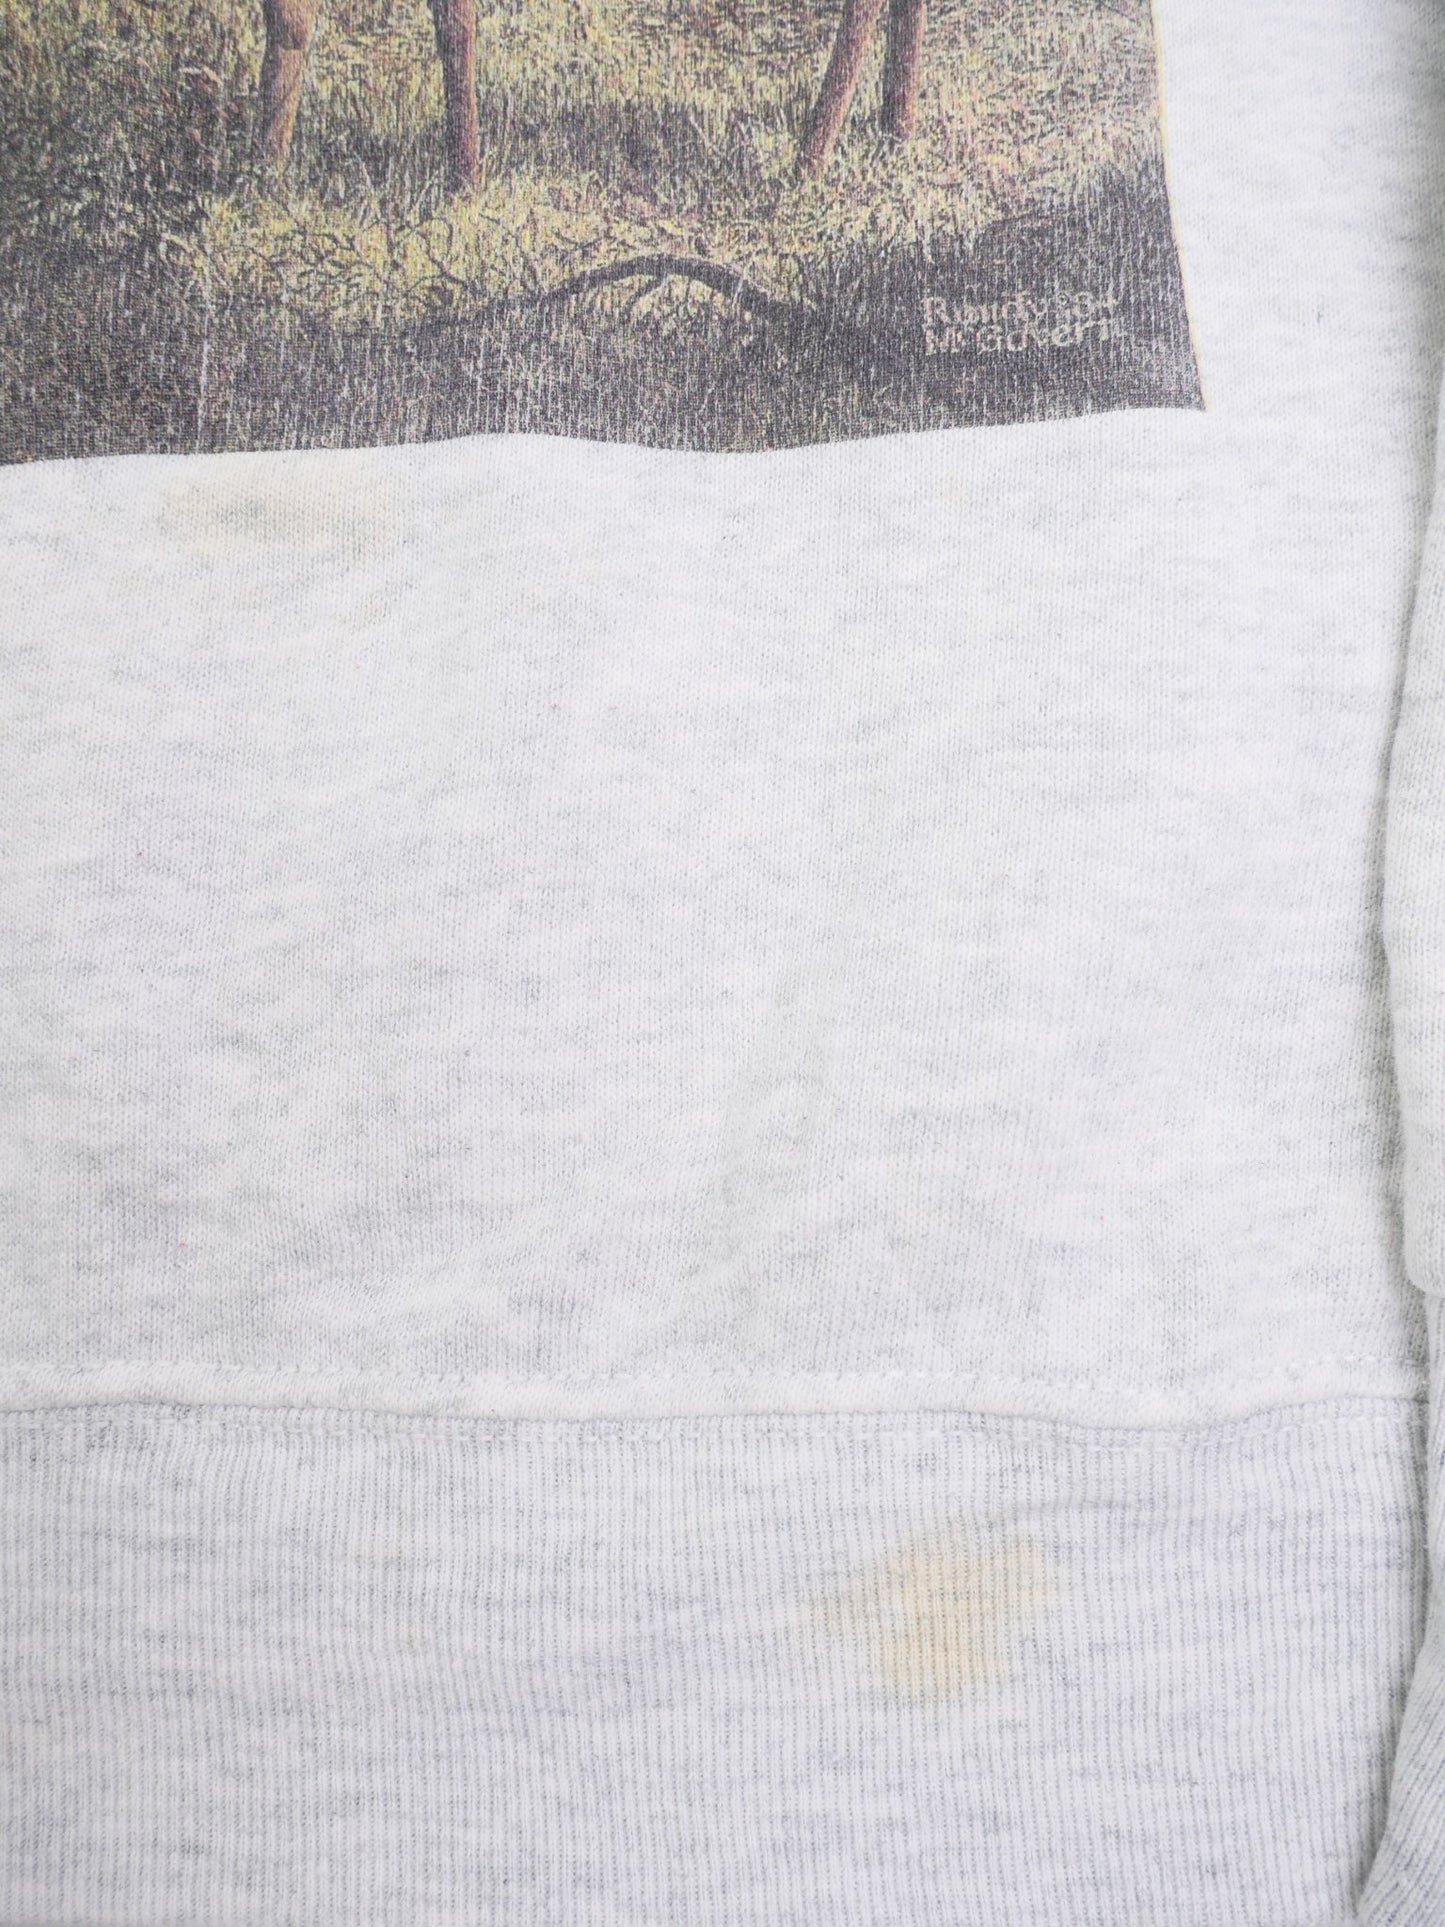 Wildlife printed Graphic grey Sweater - Peeces